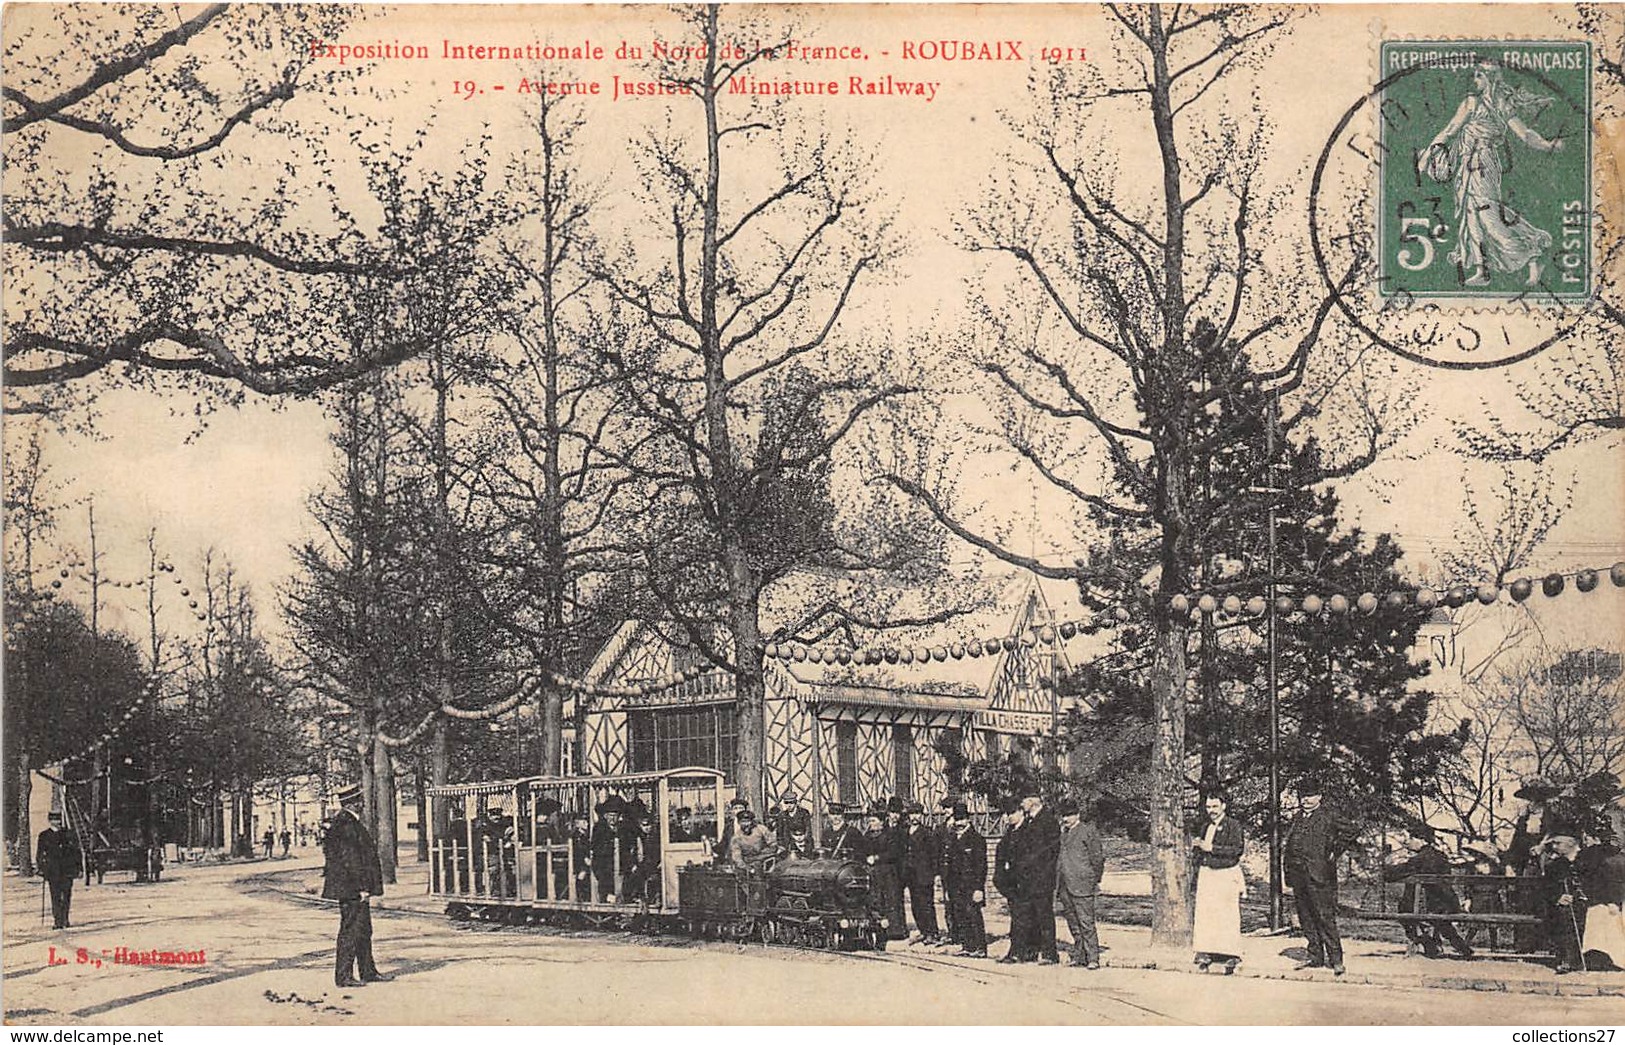 59-ROUBAIX- AVENUE JUSSIEU- MINIATURE RAILWAY- EXPOSITION INTERNATIONALE 1911 - Roubaix